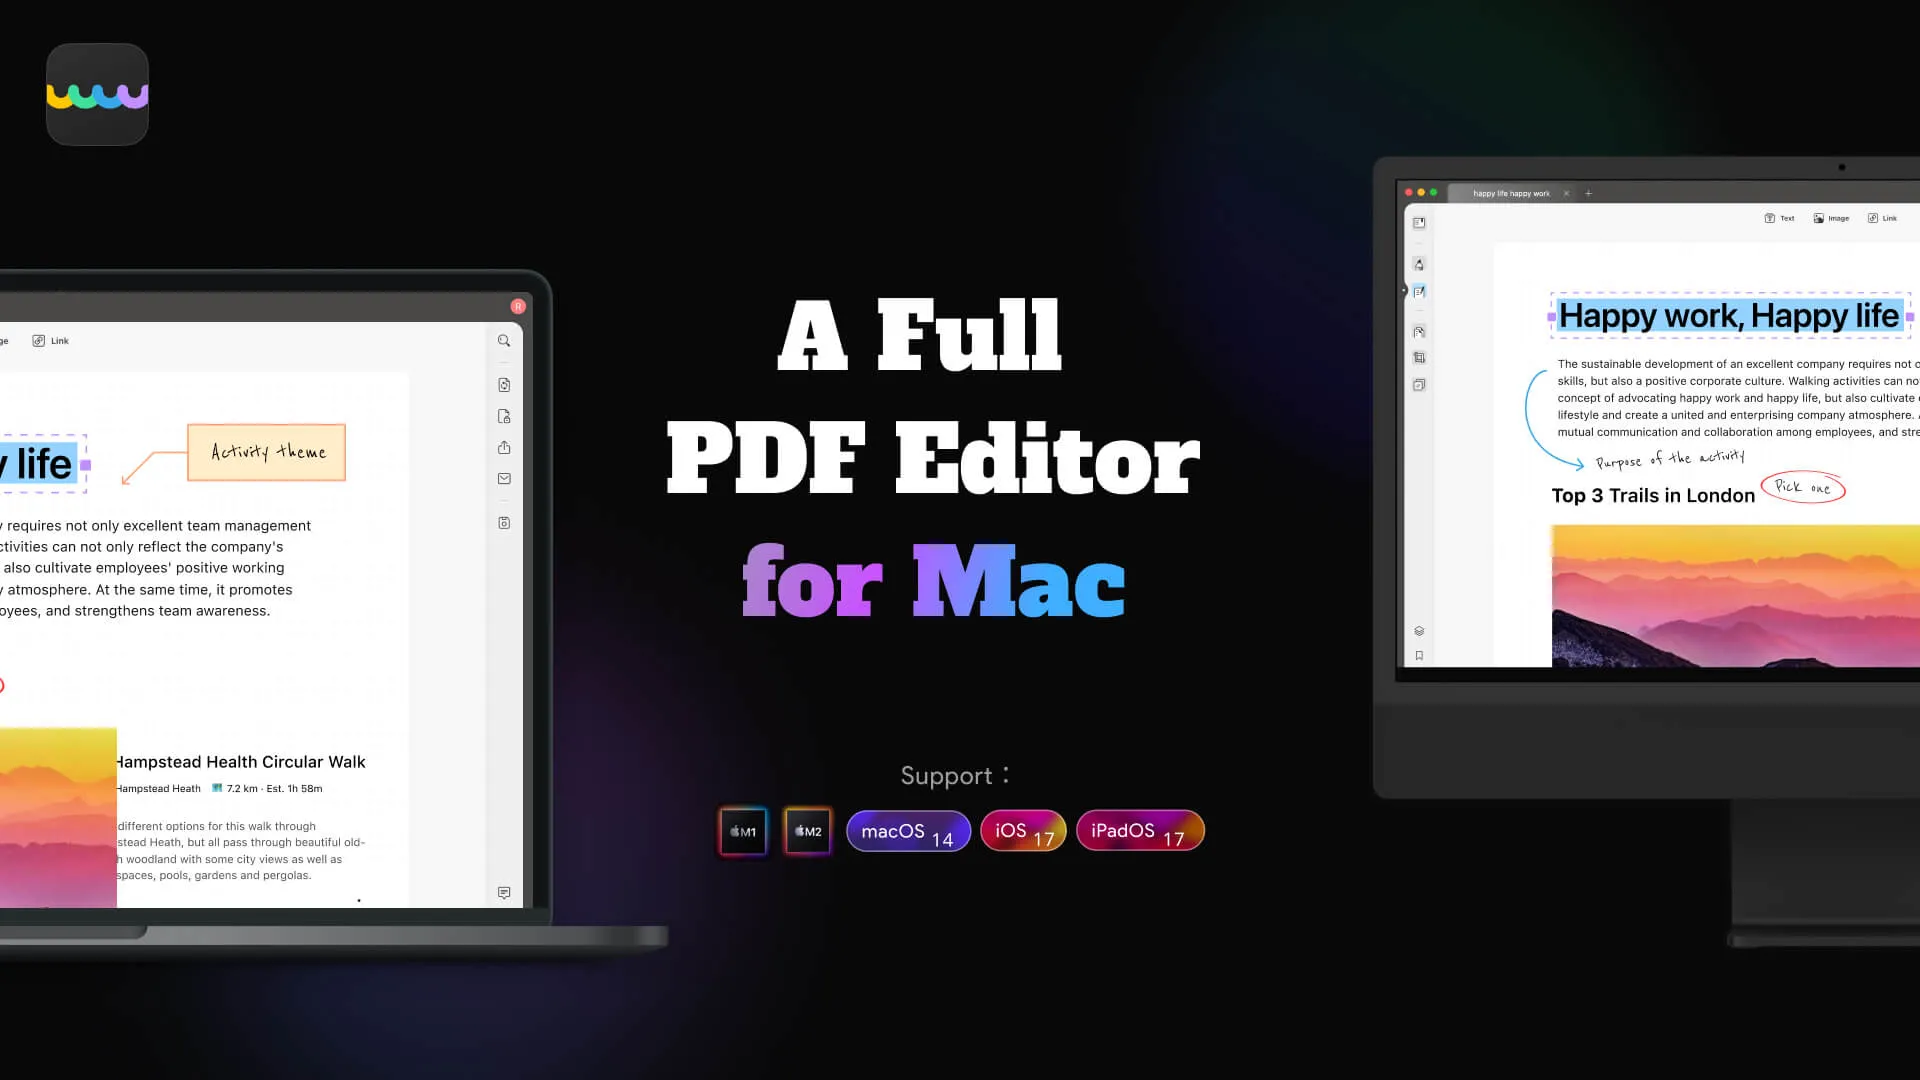 UPDF PDF editor for Mac